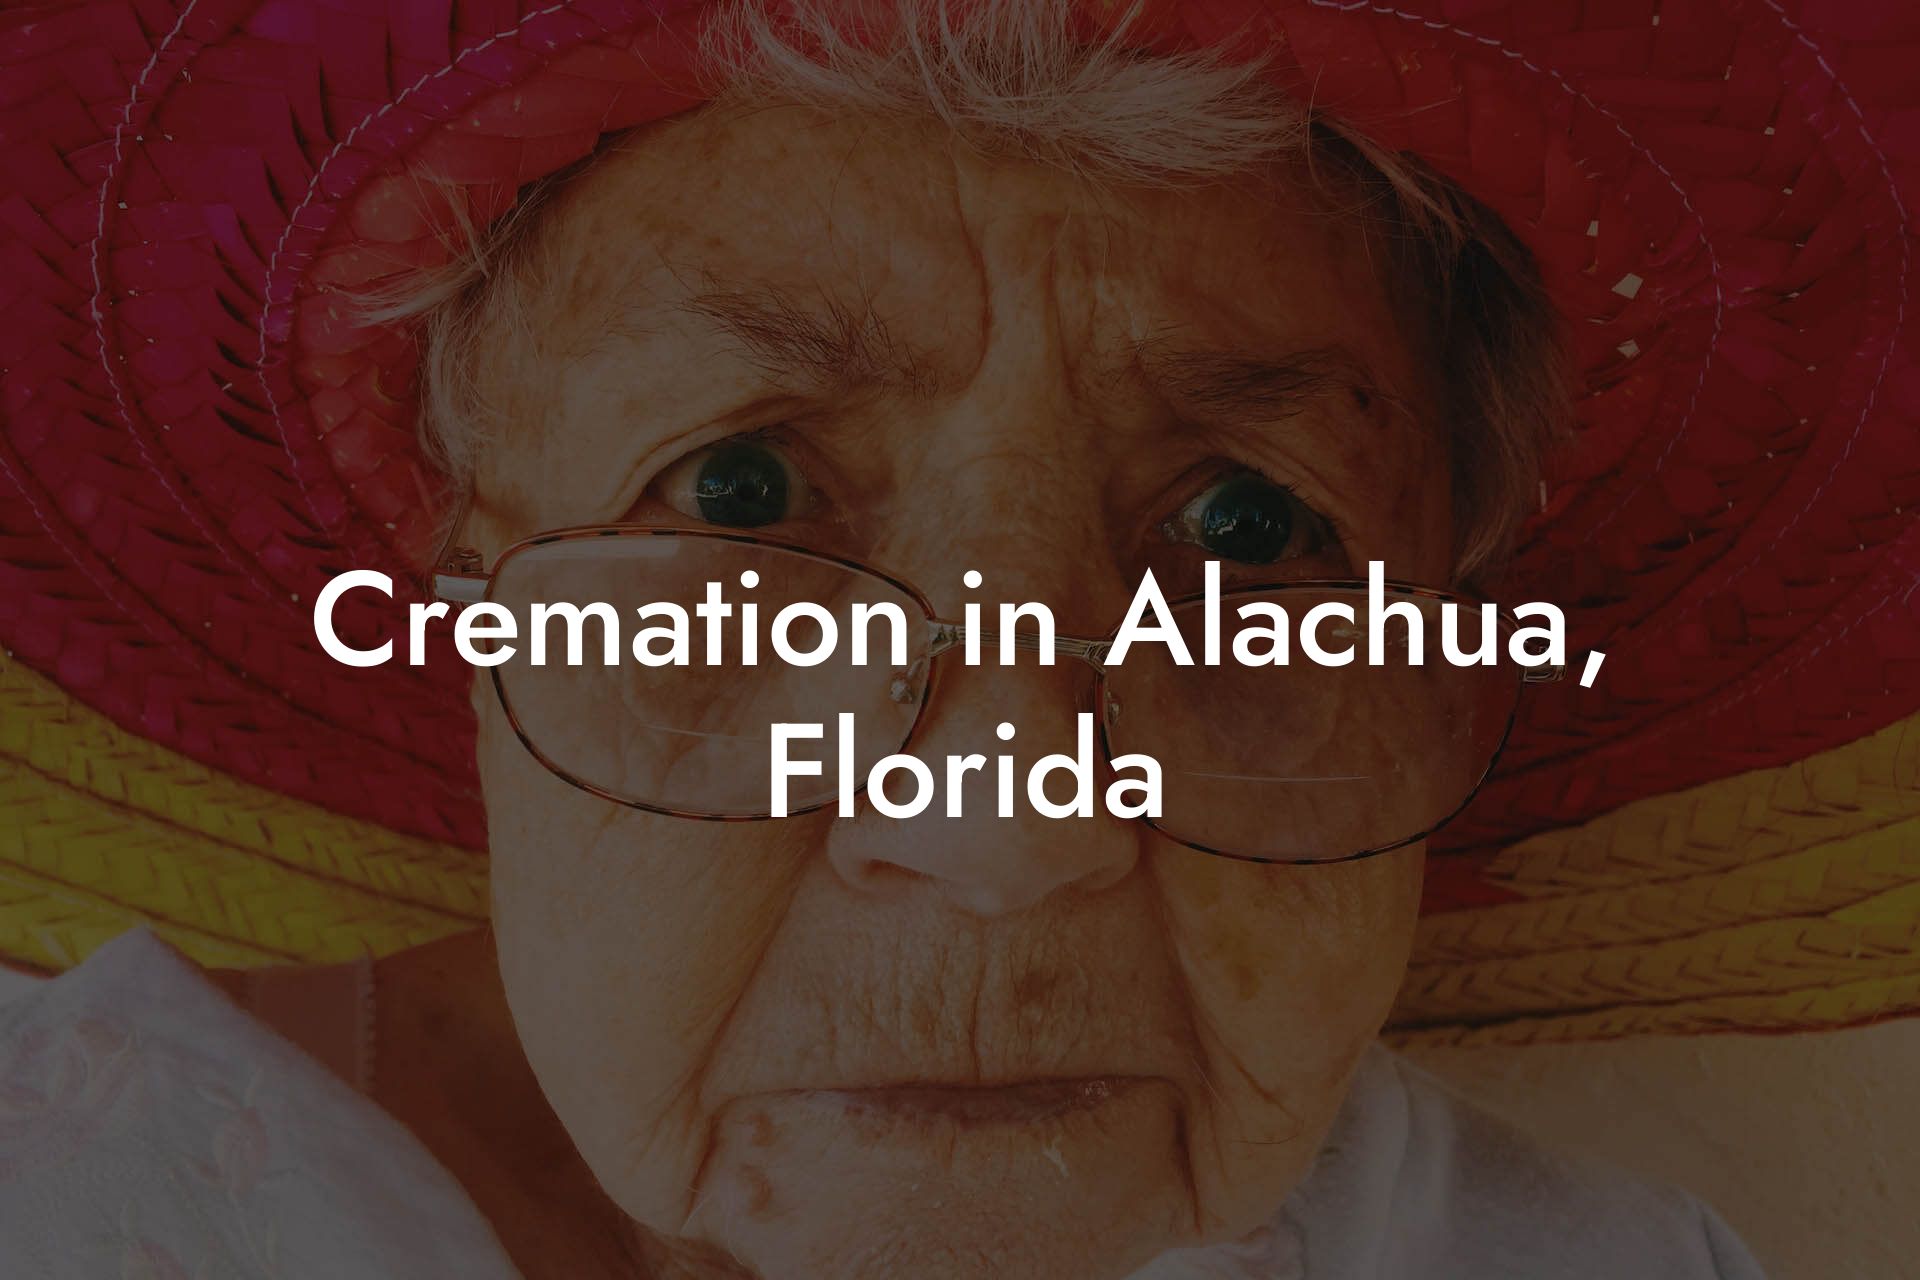 Cremation in Alachua, Florida